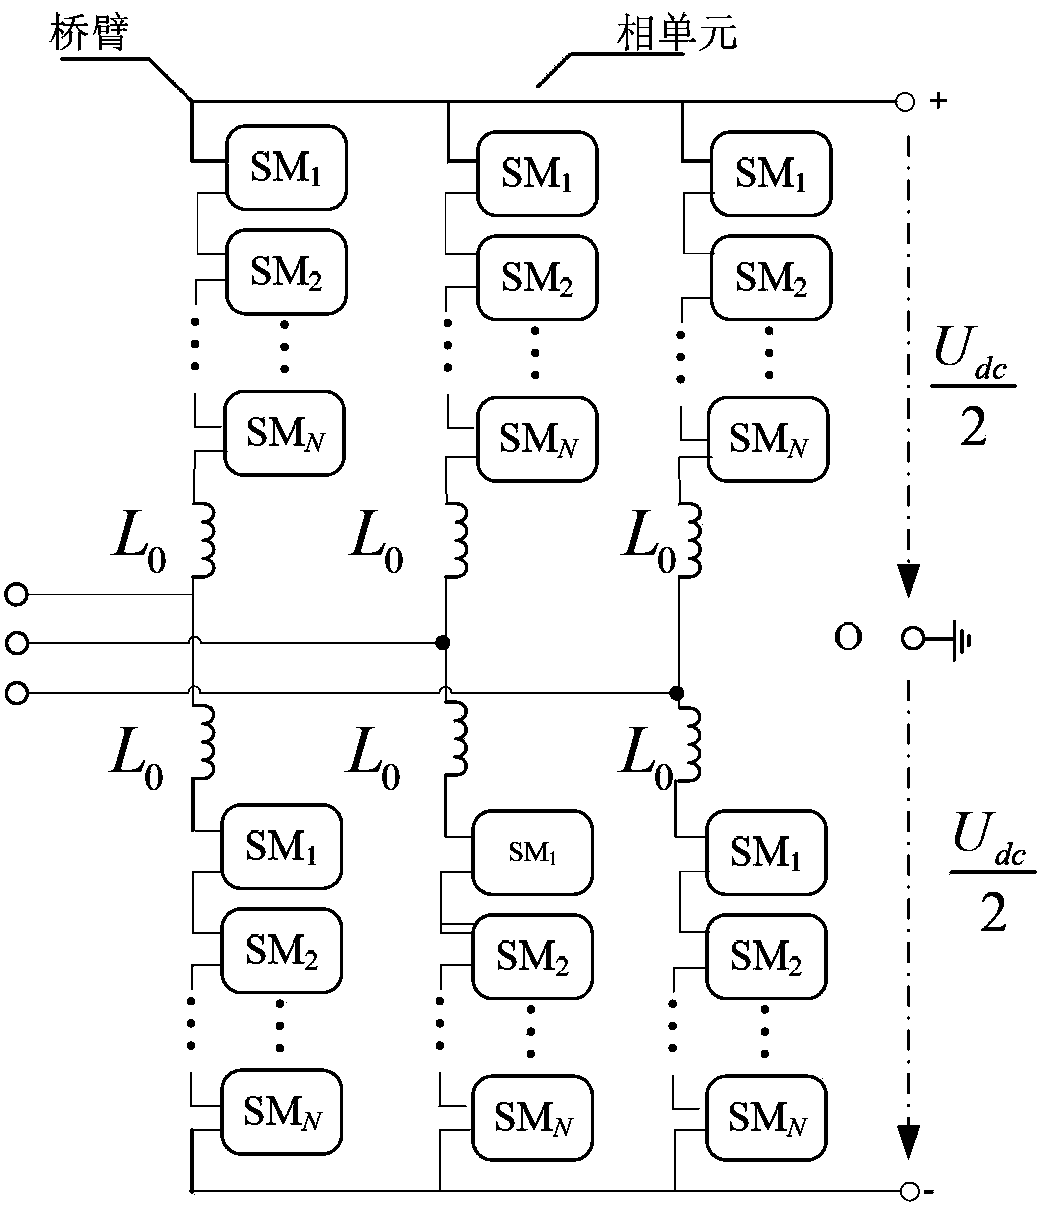 Modular multilevel converter modulation method based on double queues